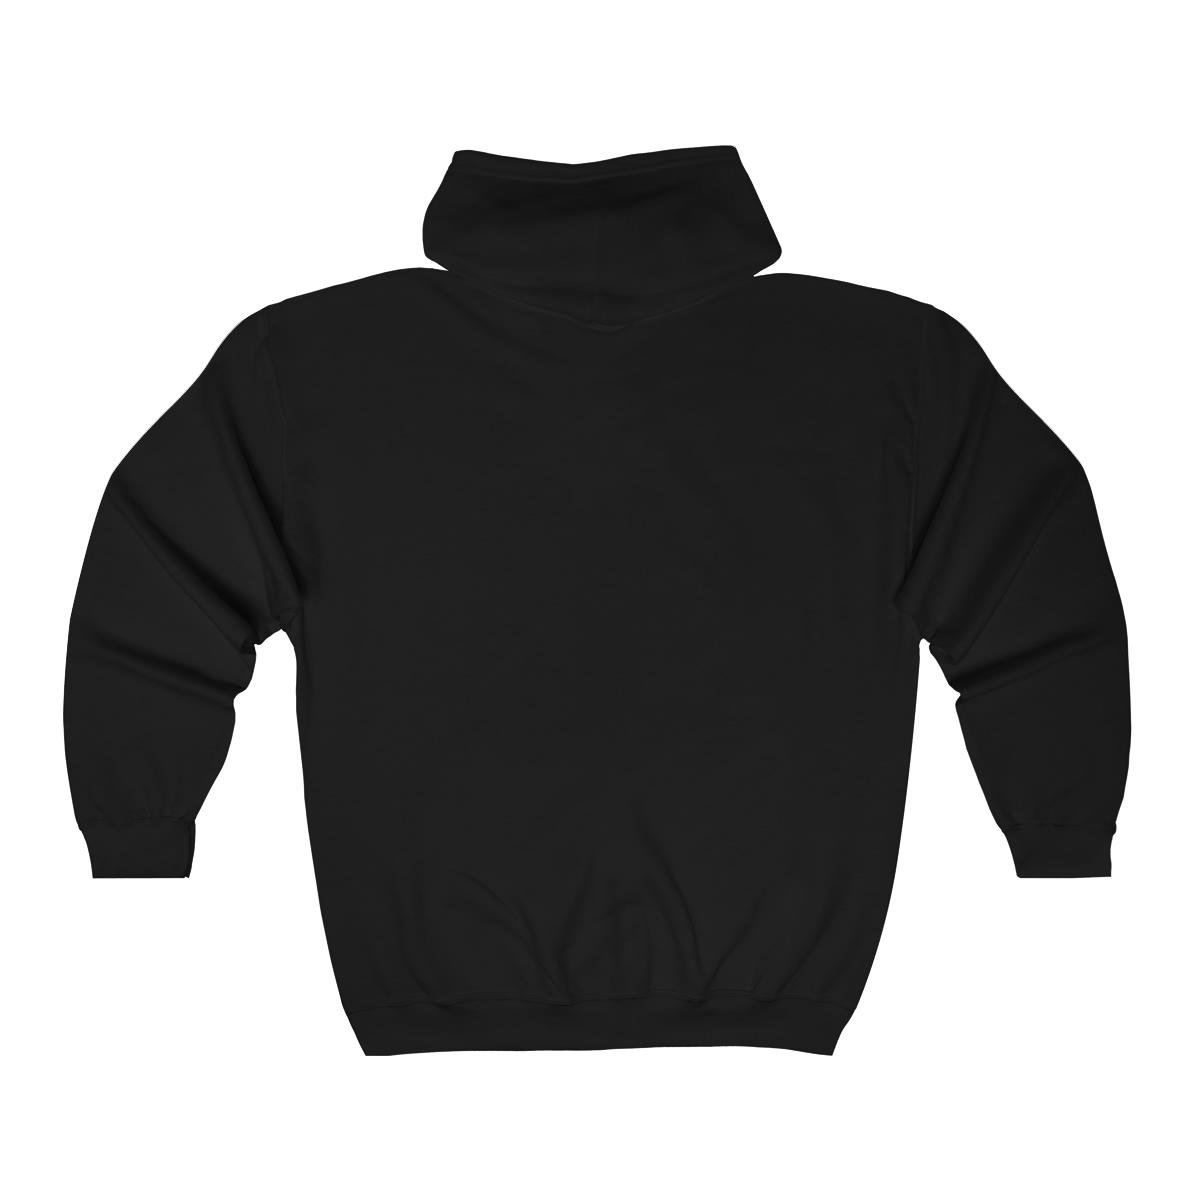 AfterWinter – Paramnesia Full Zip Hooded Sweatshirt